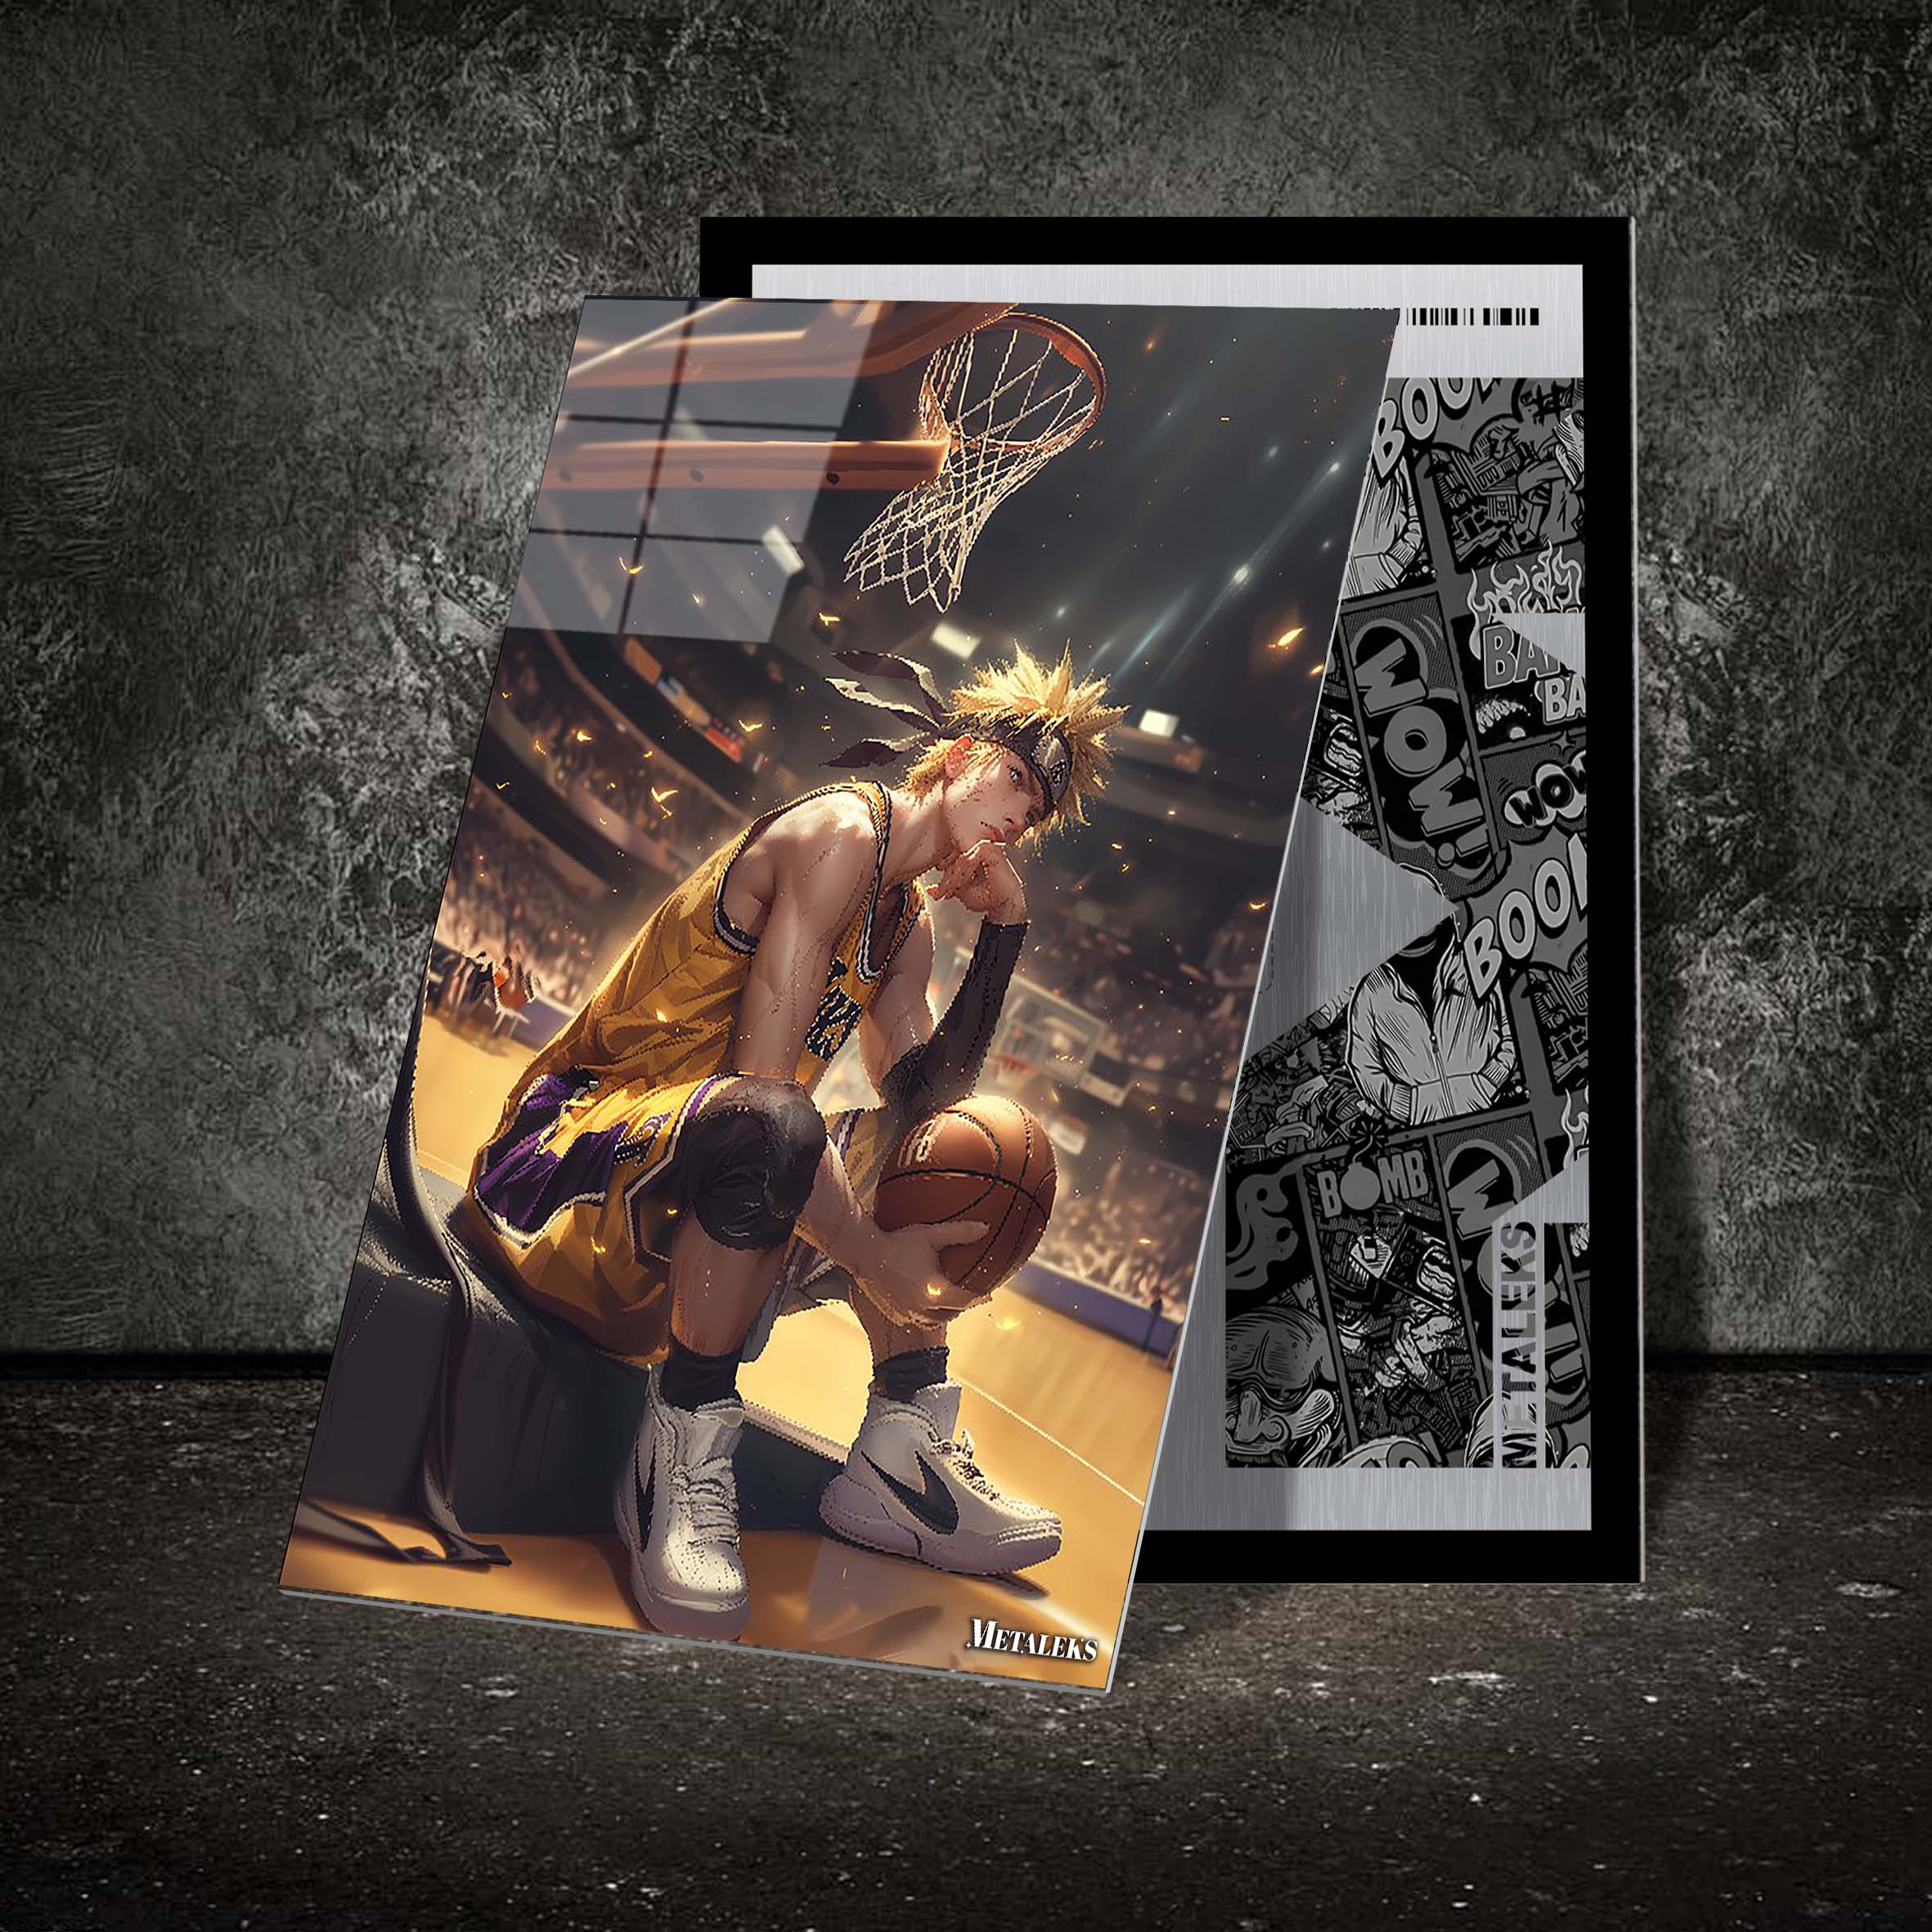 Naruto uzumaki playing basketball-designed by @Vid_M@tion